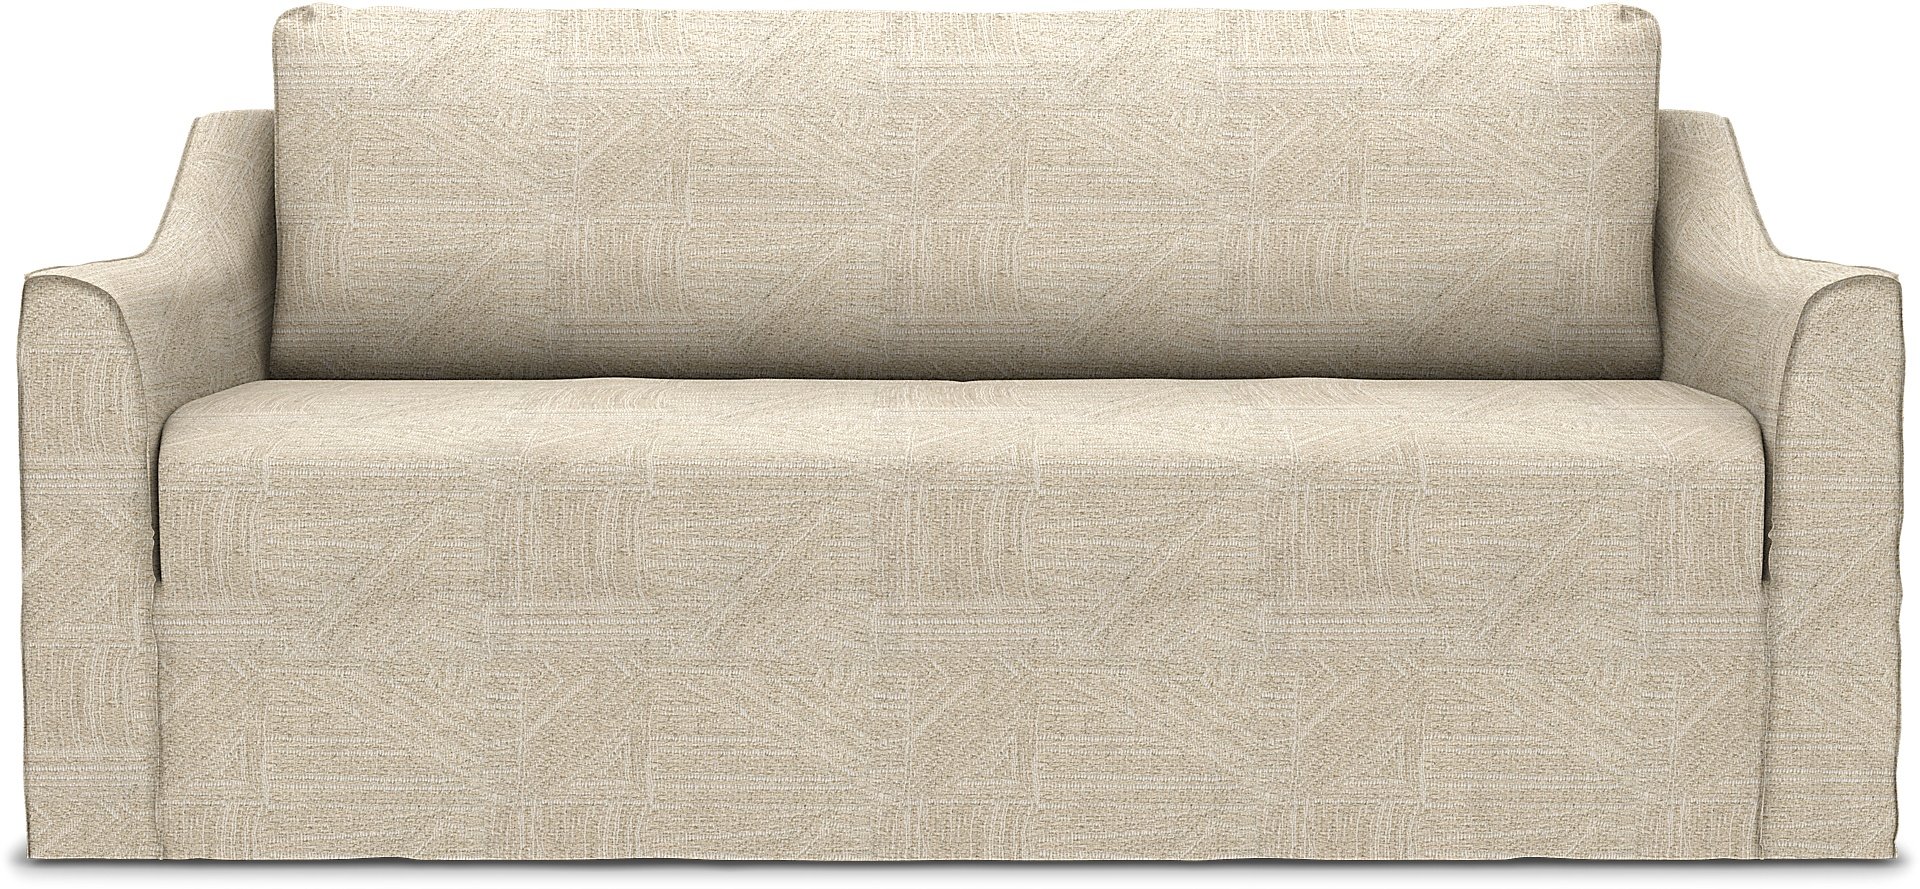 Farlov 2 seater sofa cover, Blanco, Cotton - Bemz